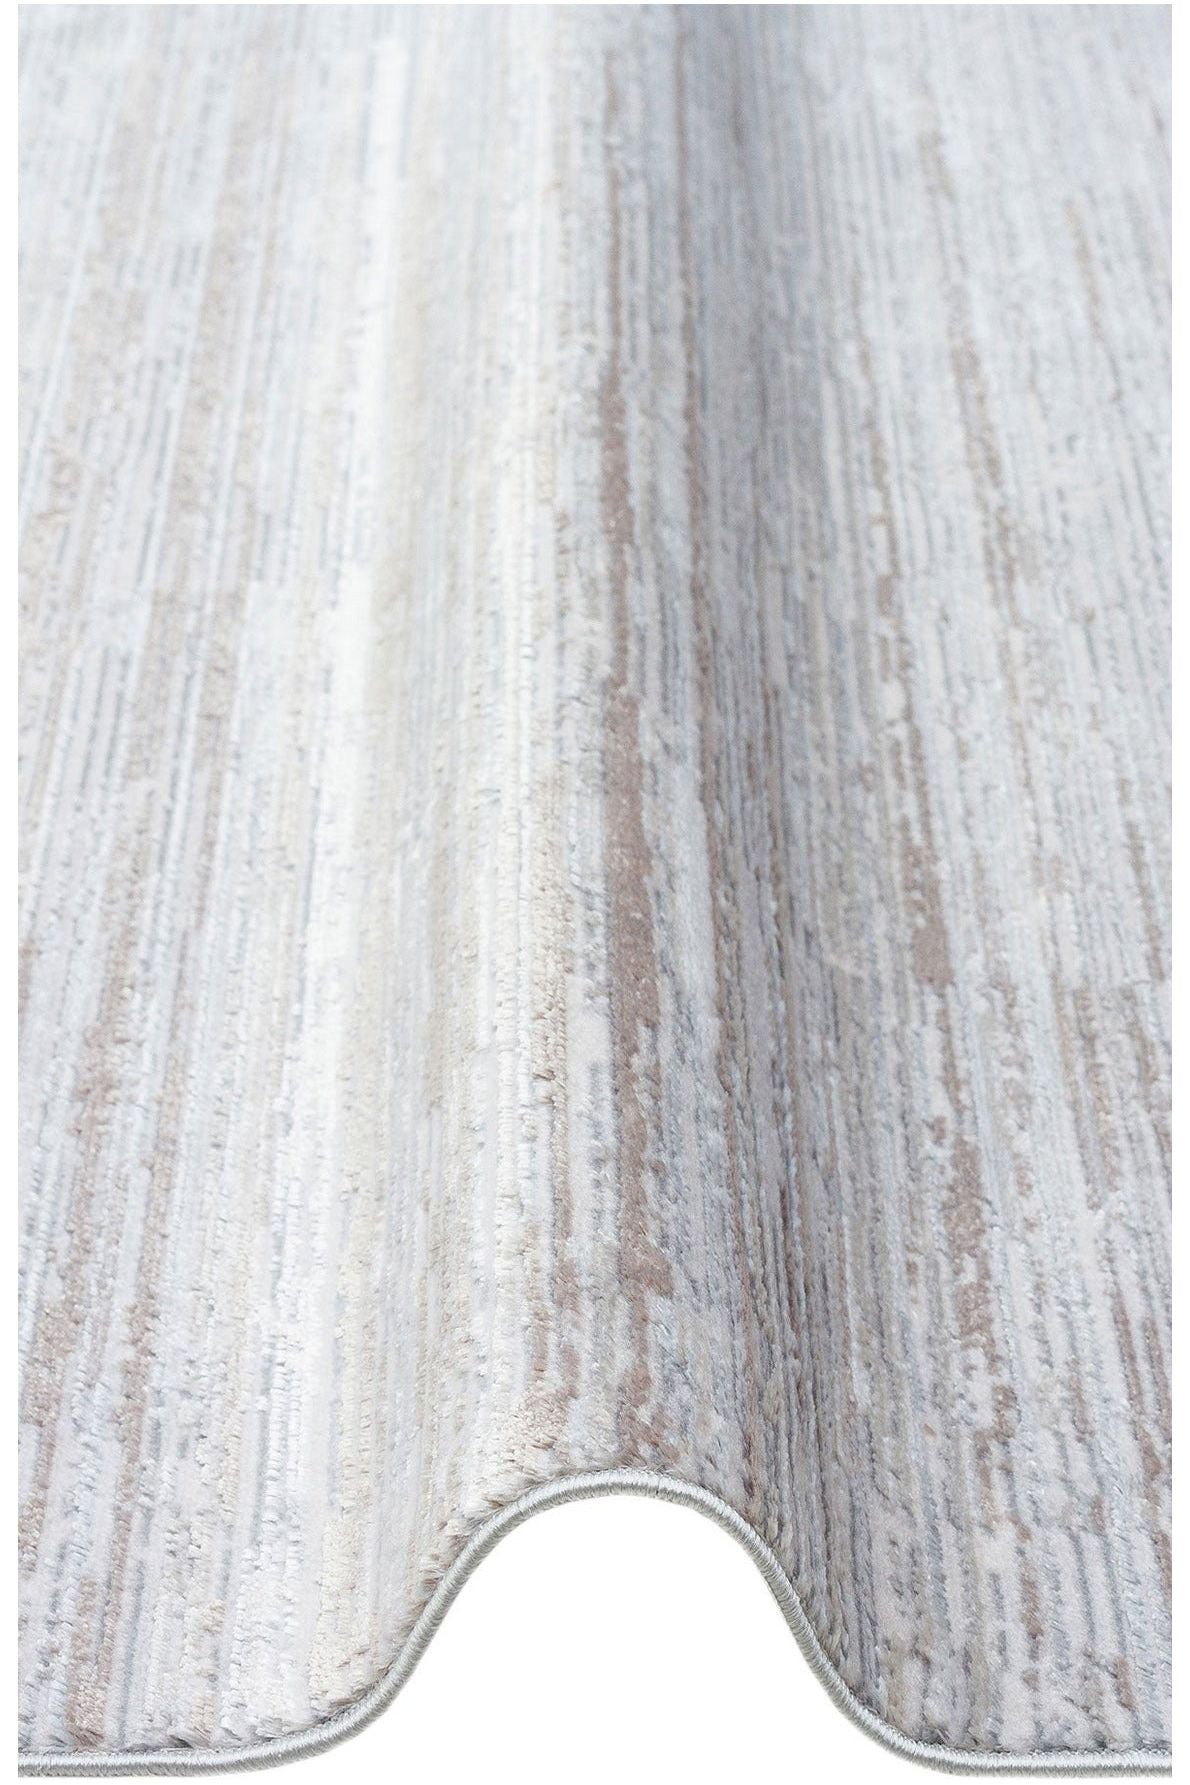 #Turkish_Carpets_Rugs# #Modern_Carpets# #Abrash_Carpets#Blv Plain Light Grey